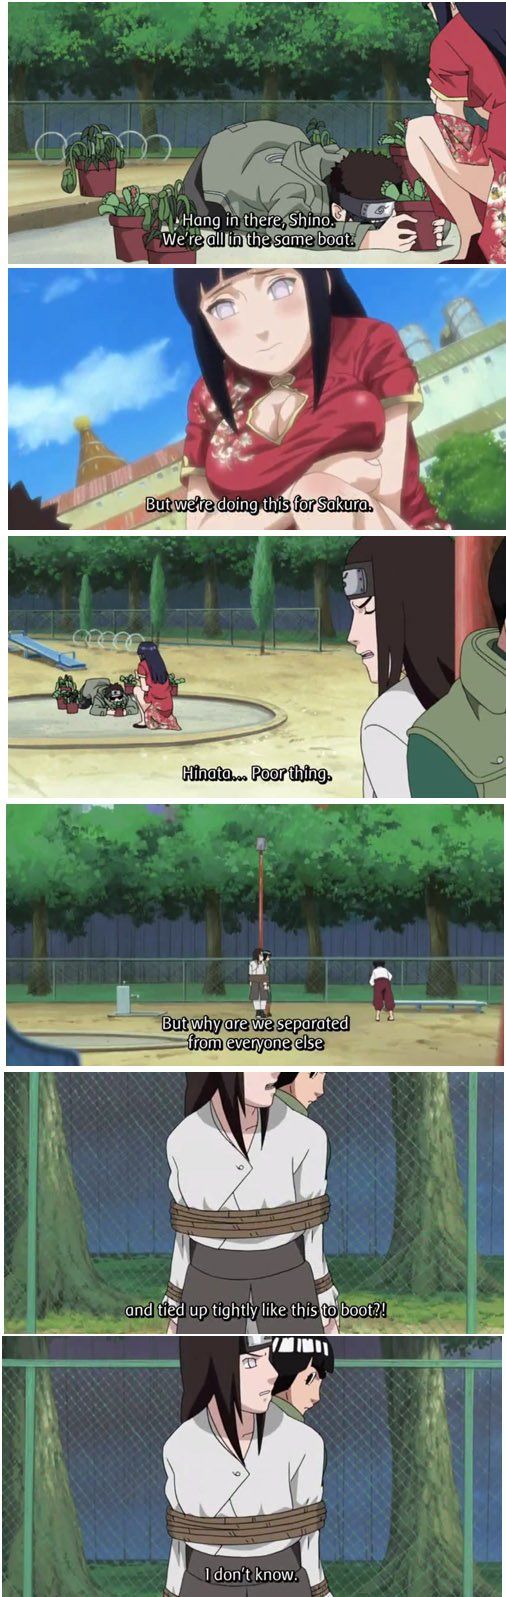 best of Moments hinata shippuden funny Naruto